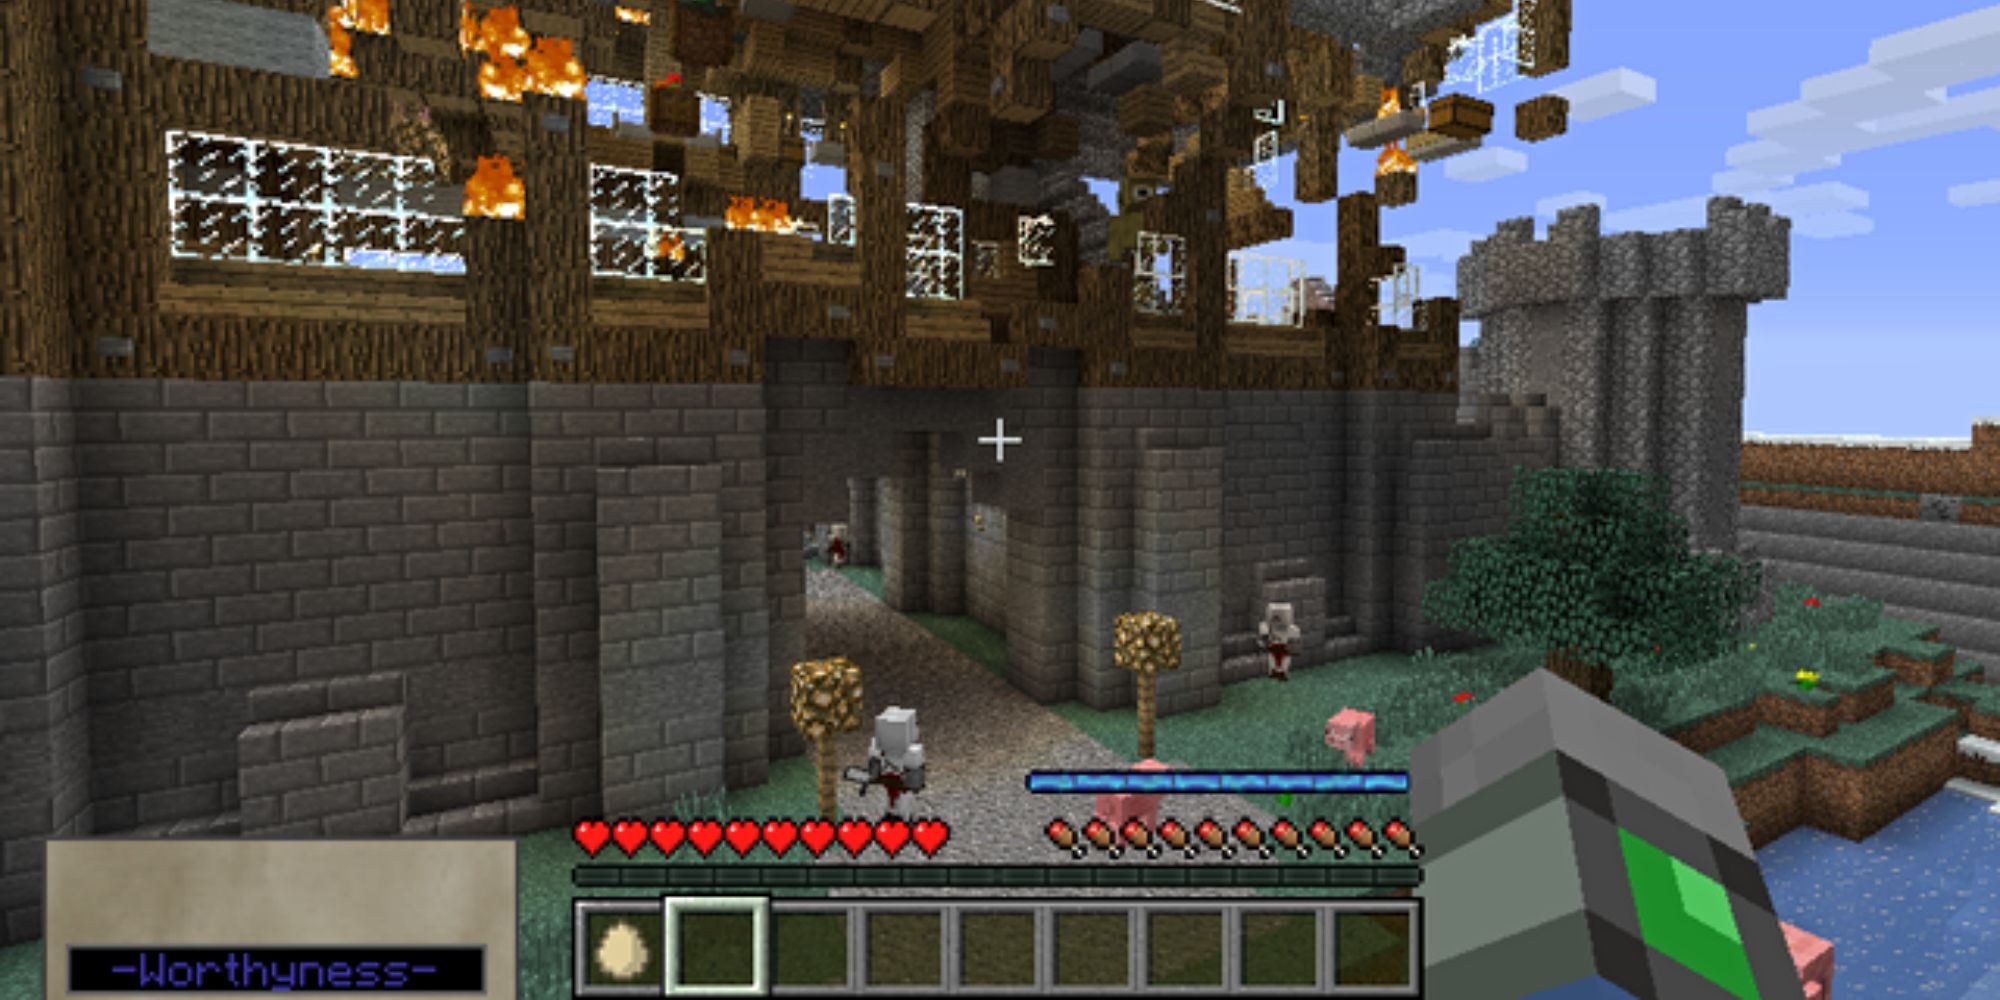 DivineRPG minecraft mod of burning town